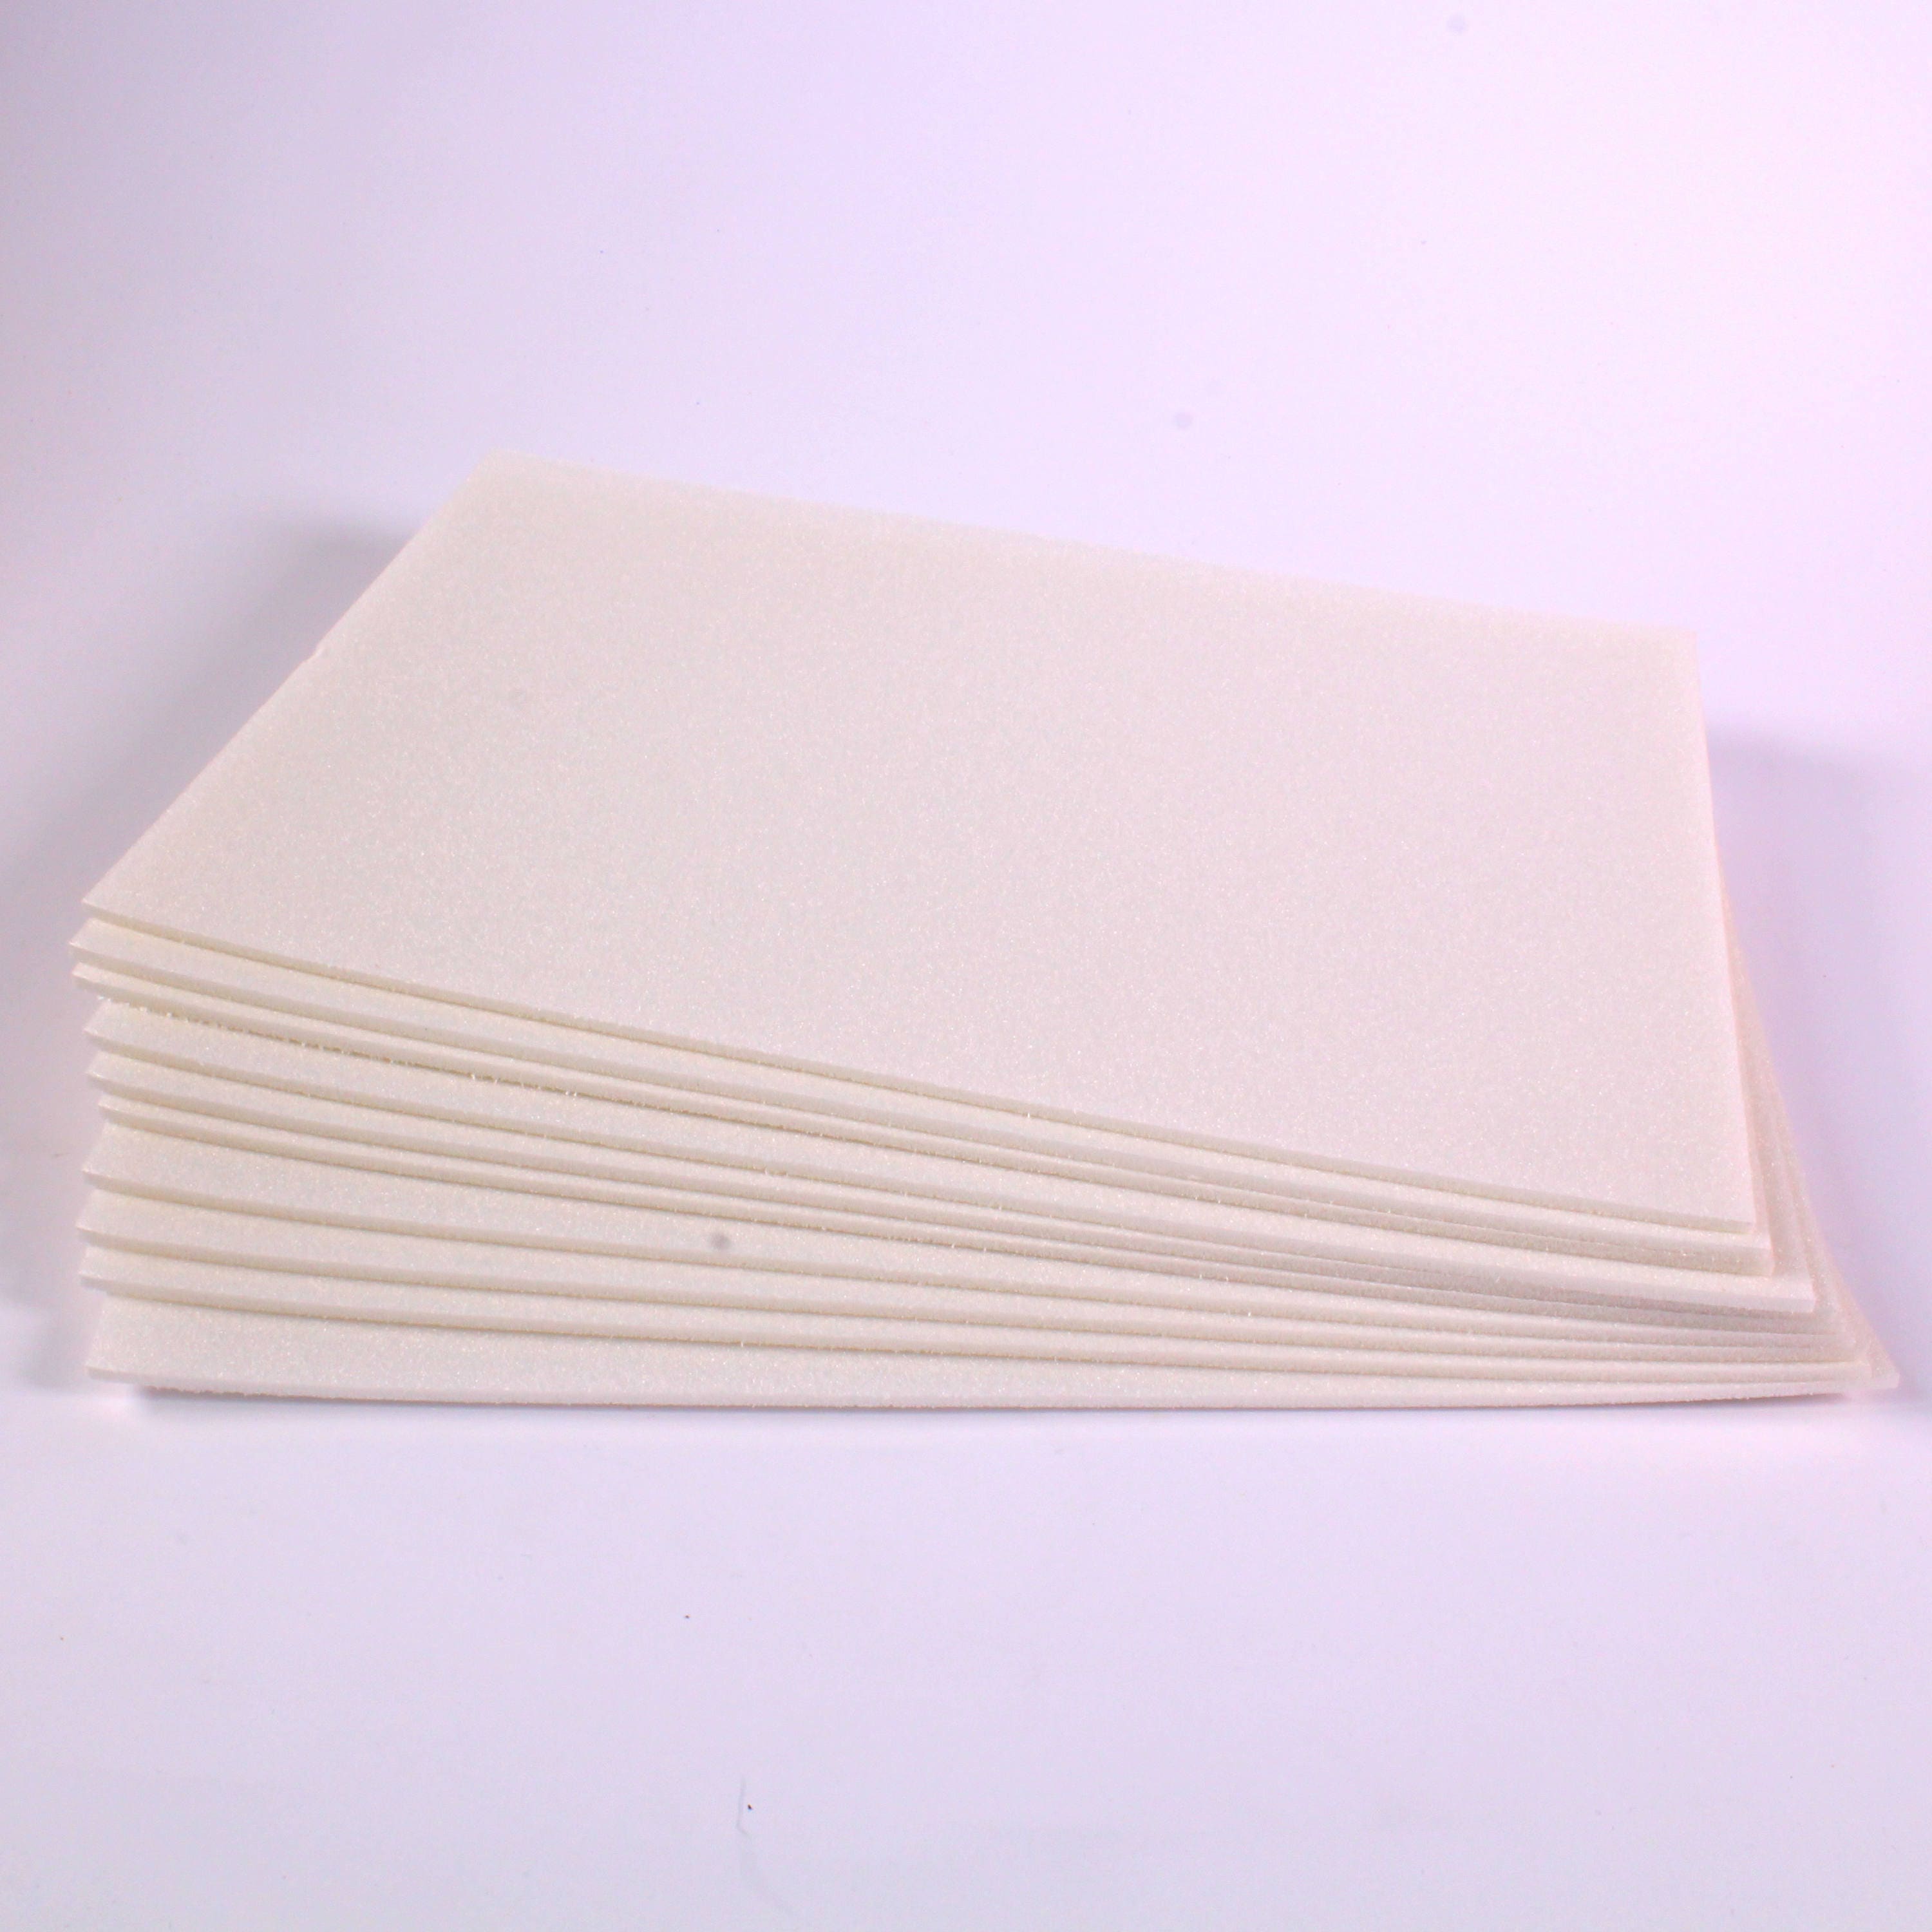 Safeprint White Foam Sheets Art Printing Alternative to Lino Block